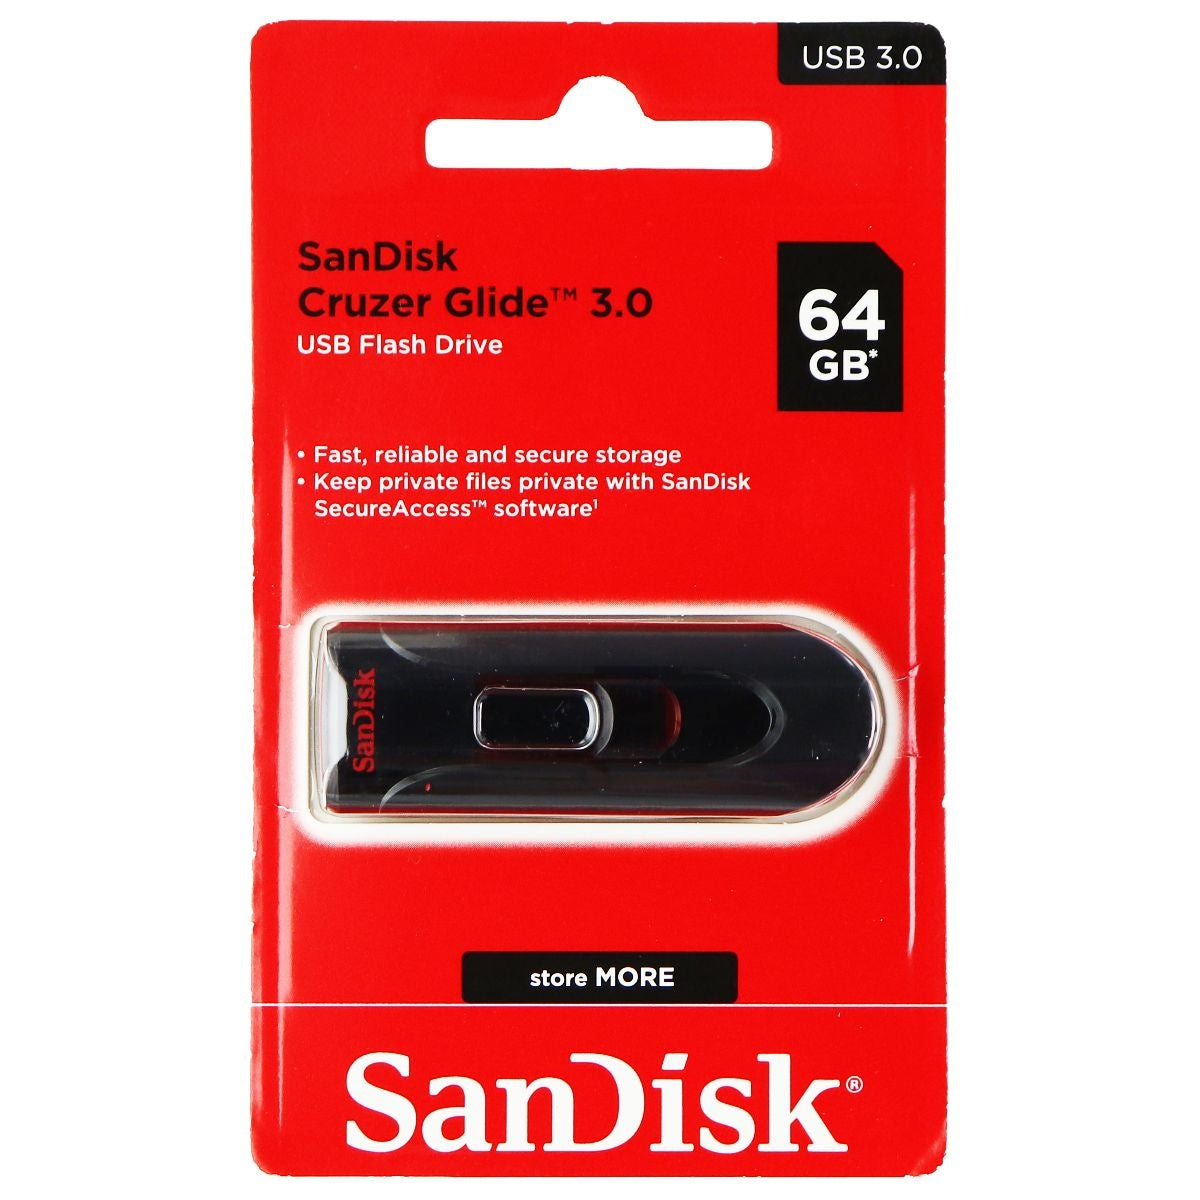 SanDisk Cruzer Glide USB 3.0 Flash Drive (64GB) - Black Digital Storage - USB Flash Drives SanDisk    - Simple Cell Bulk Wholesale Pricing - USA Seller